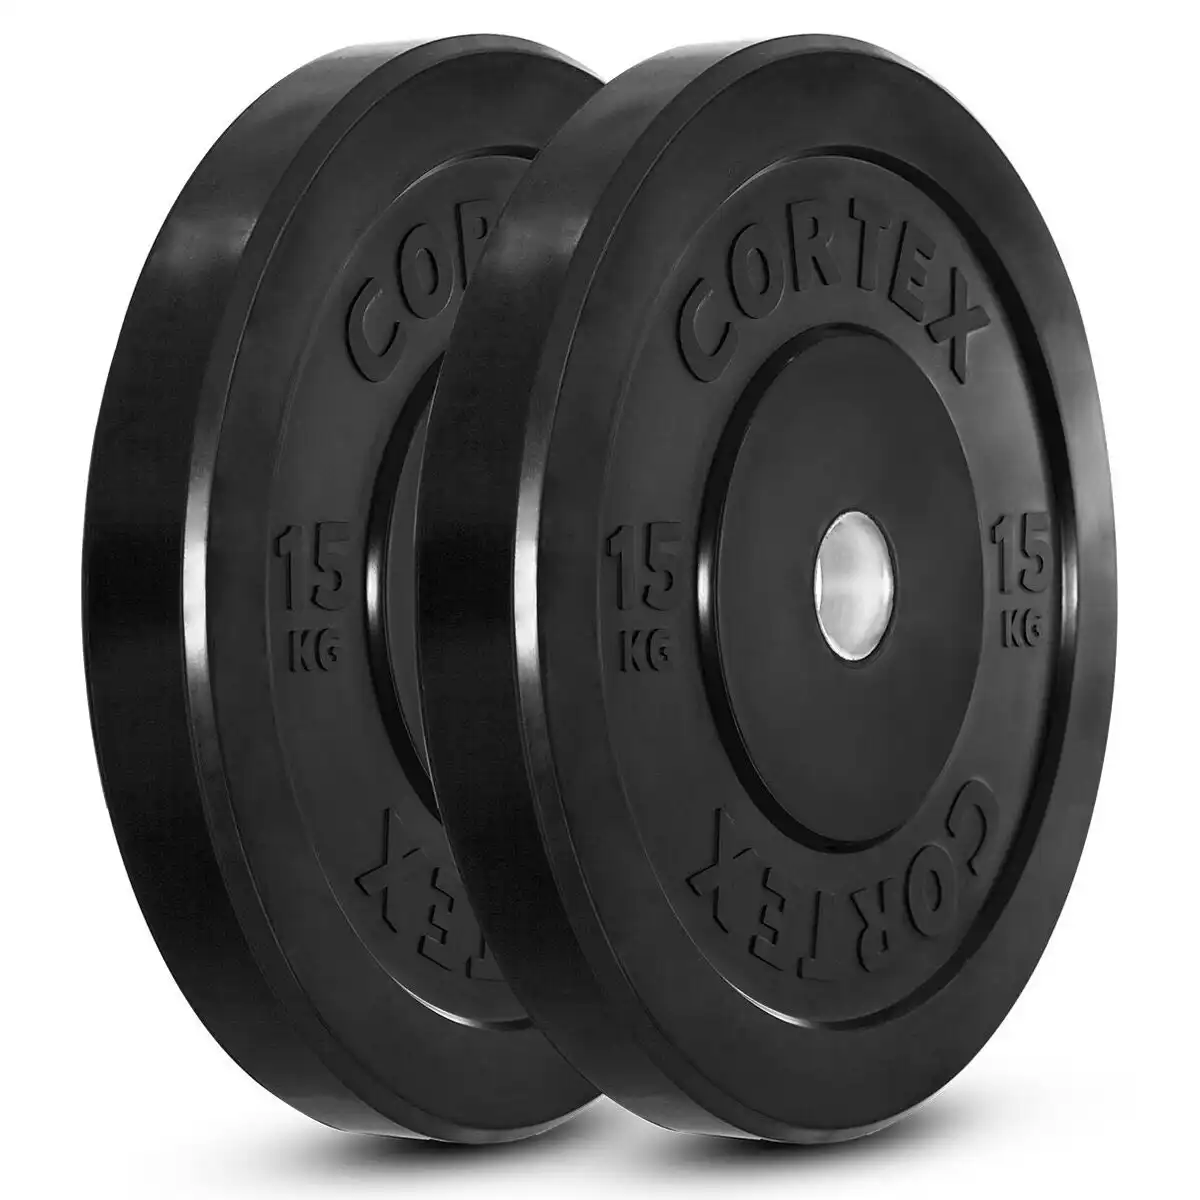 Cortex 15kg Black Series Bumper Plates